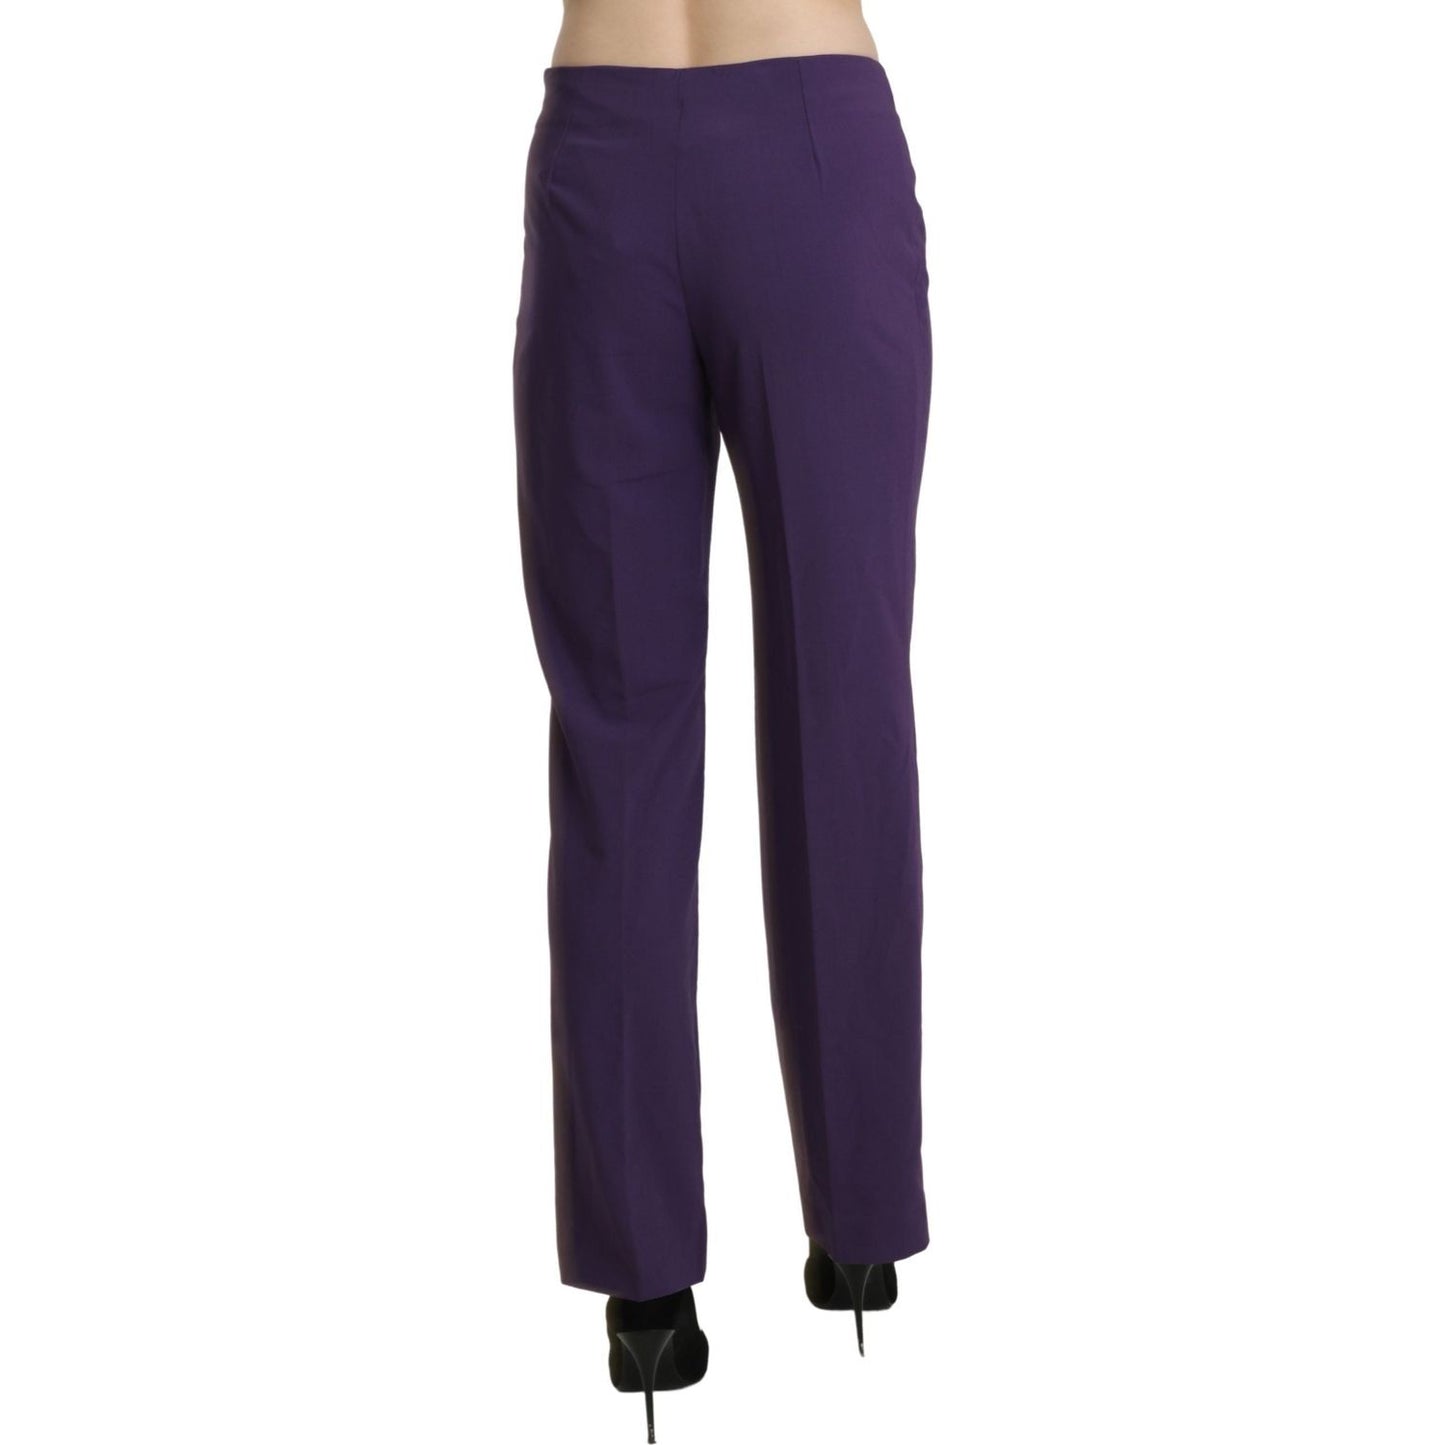 BENCIVENGA Elegant High Waist Violet Straight Pants purple-high-waist-straight-dress-trouser-pants IMG_1056-scaled-6bc525a8-c7a.jpg